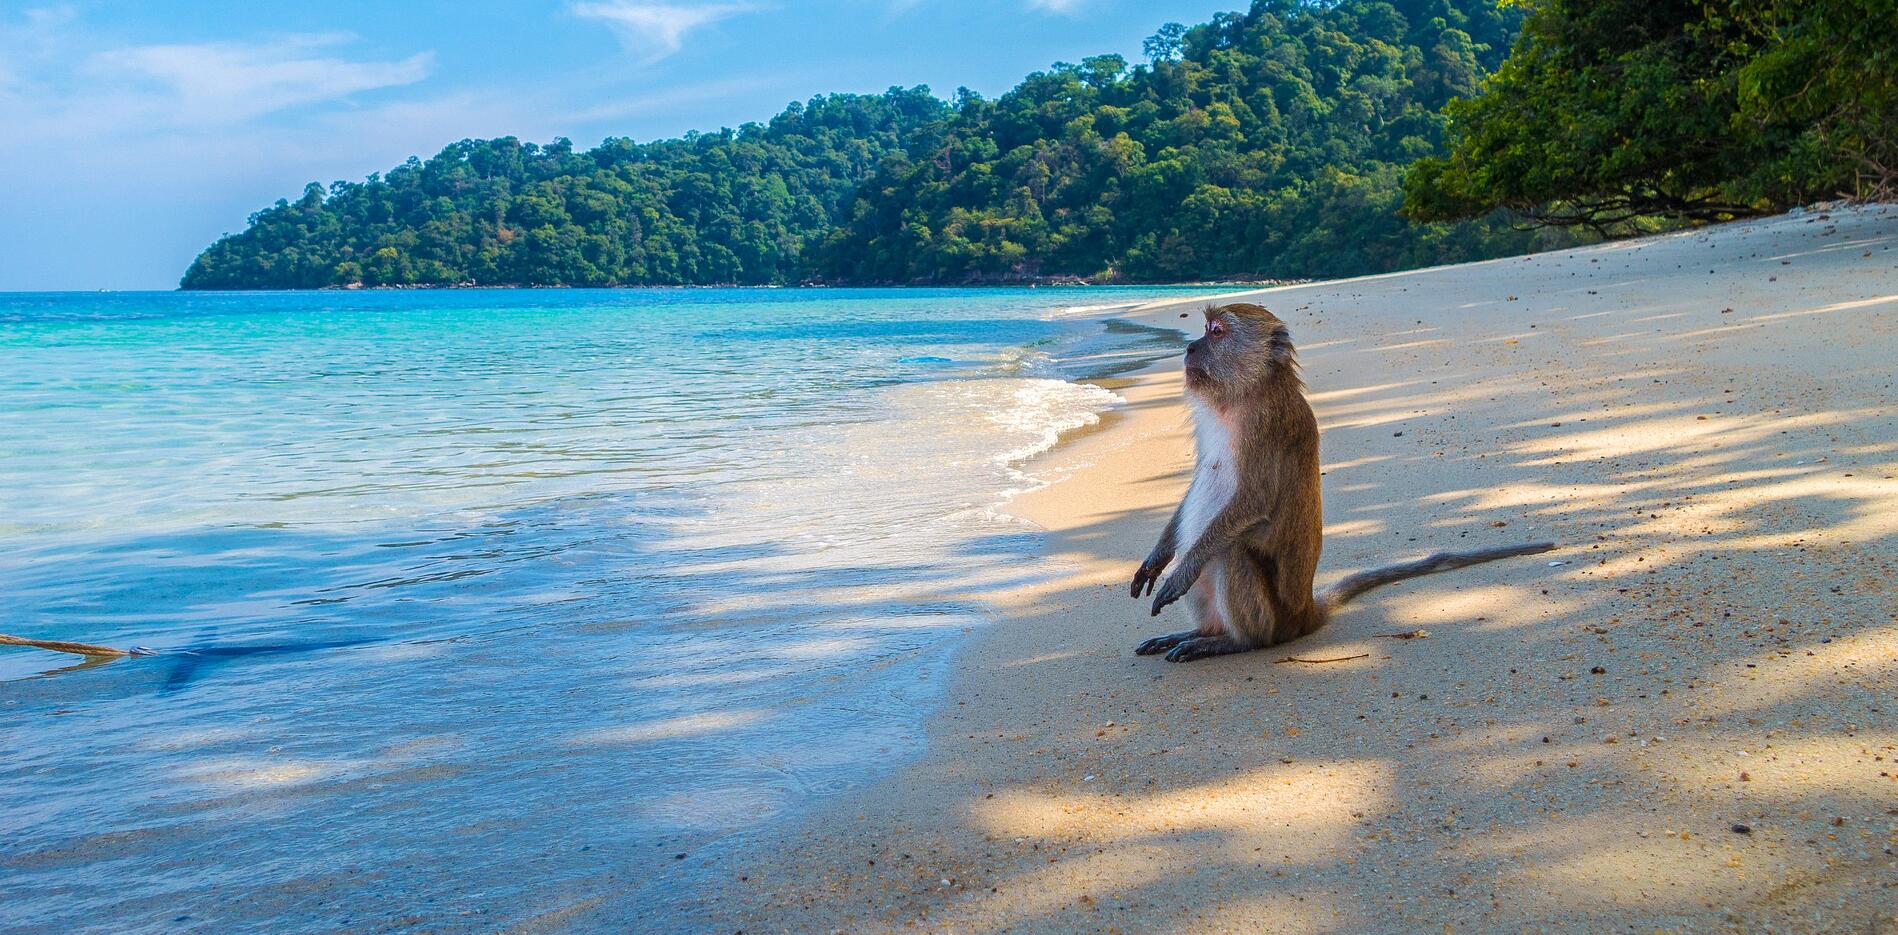 Thailand's most popular beaches